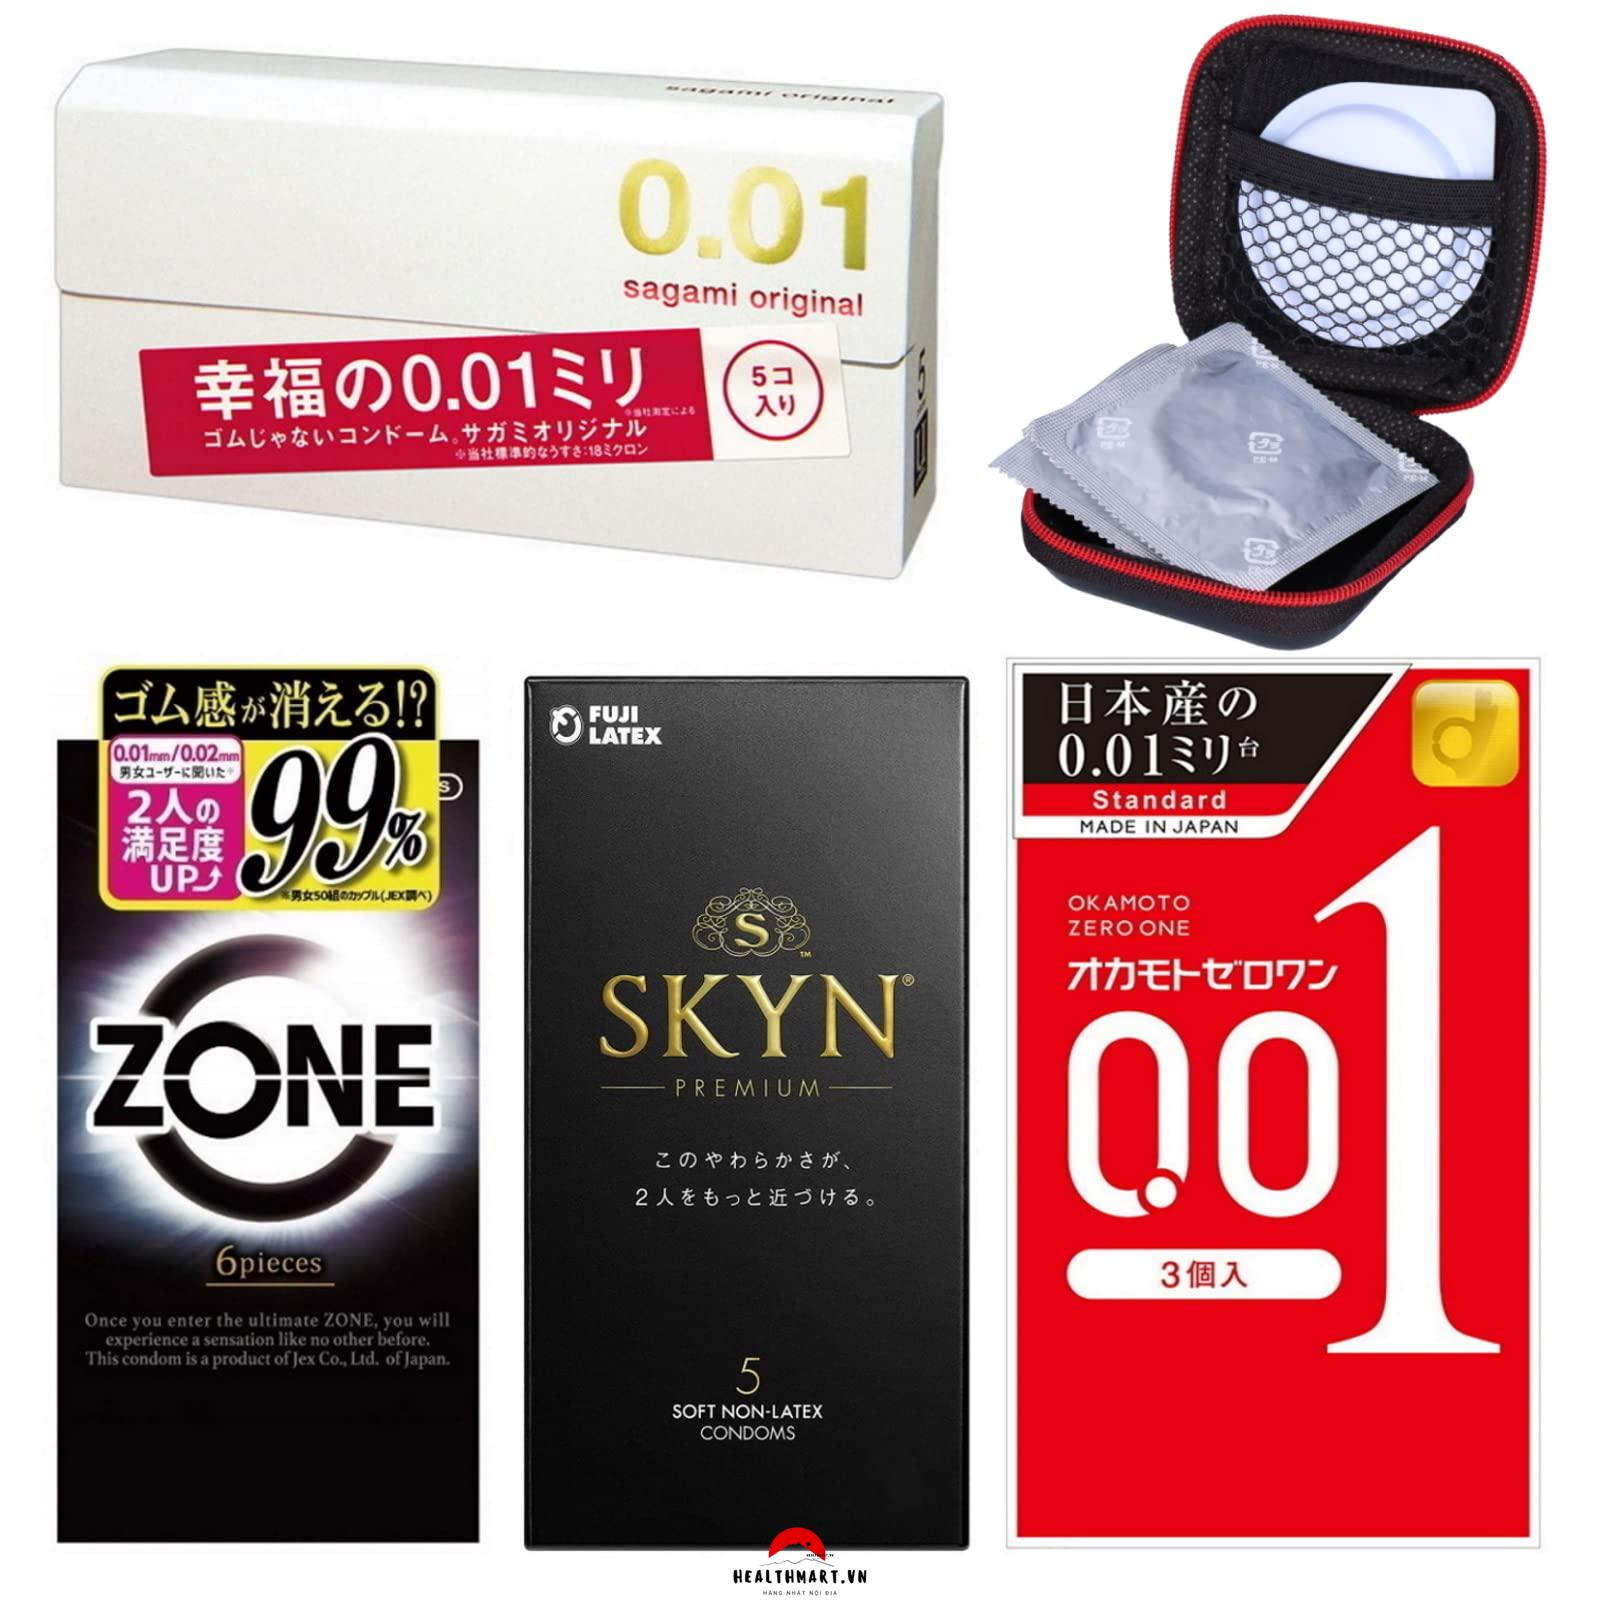 Tránh thai bằng cách dùng bao cao su コンドーム/condomu